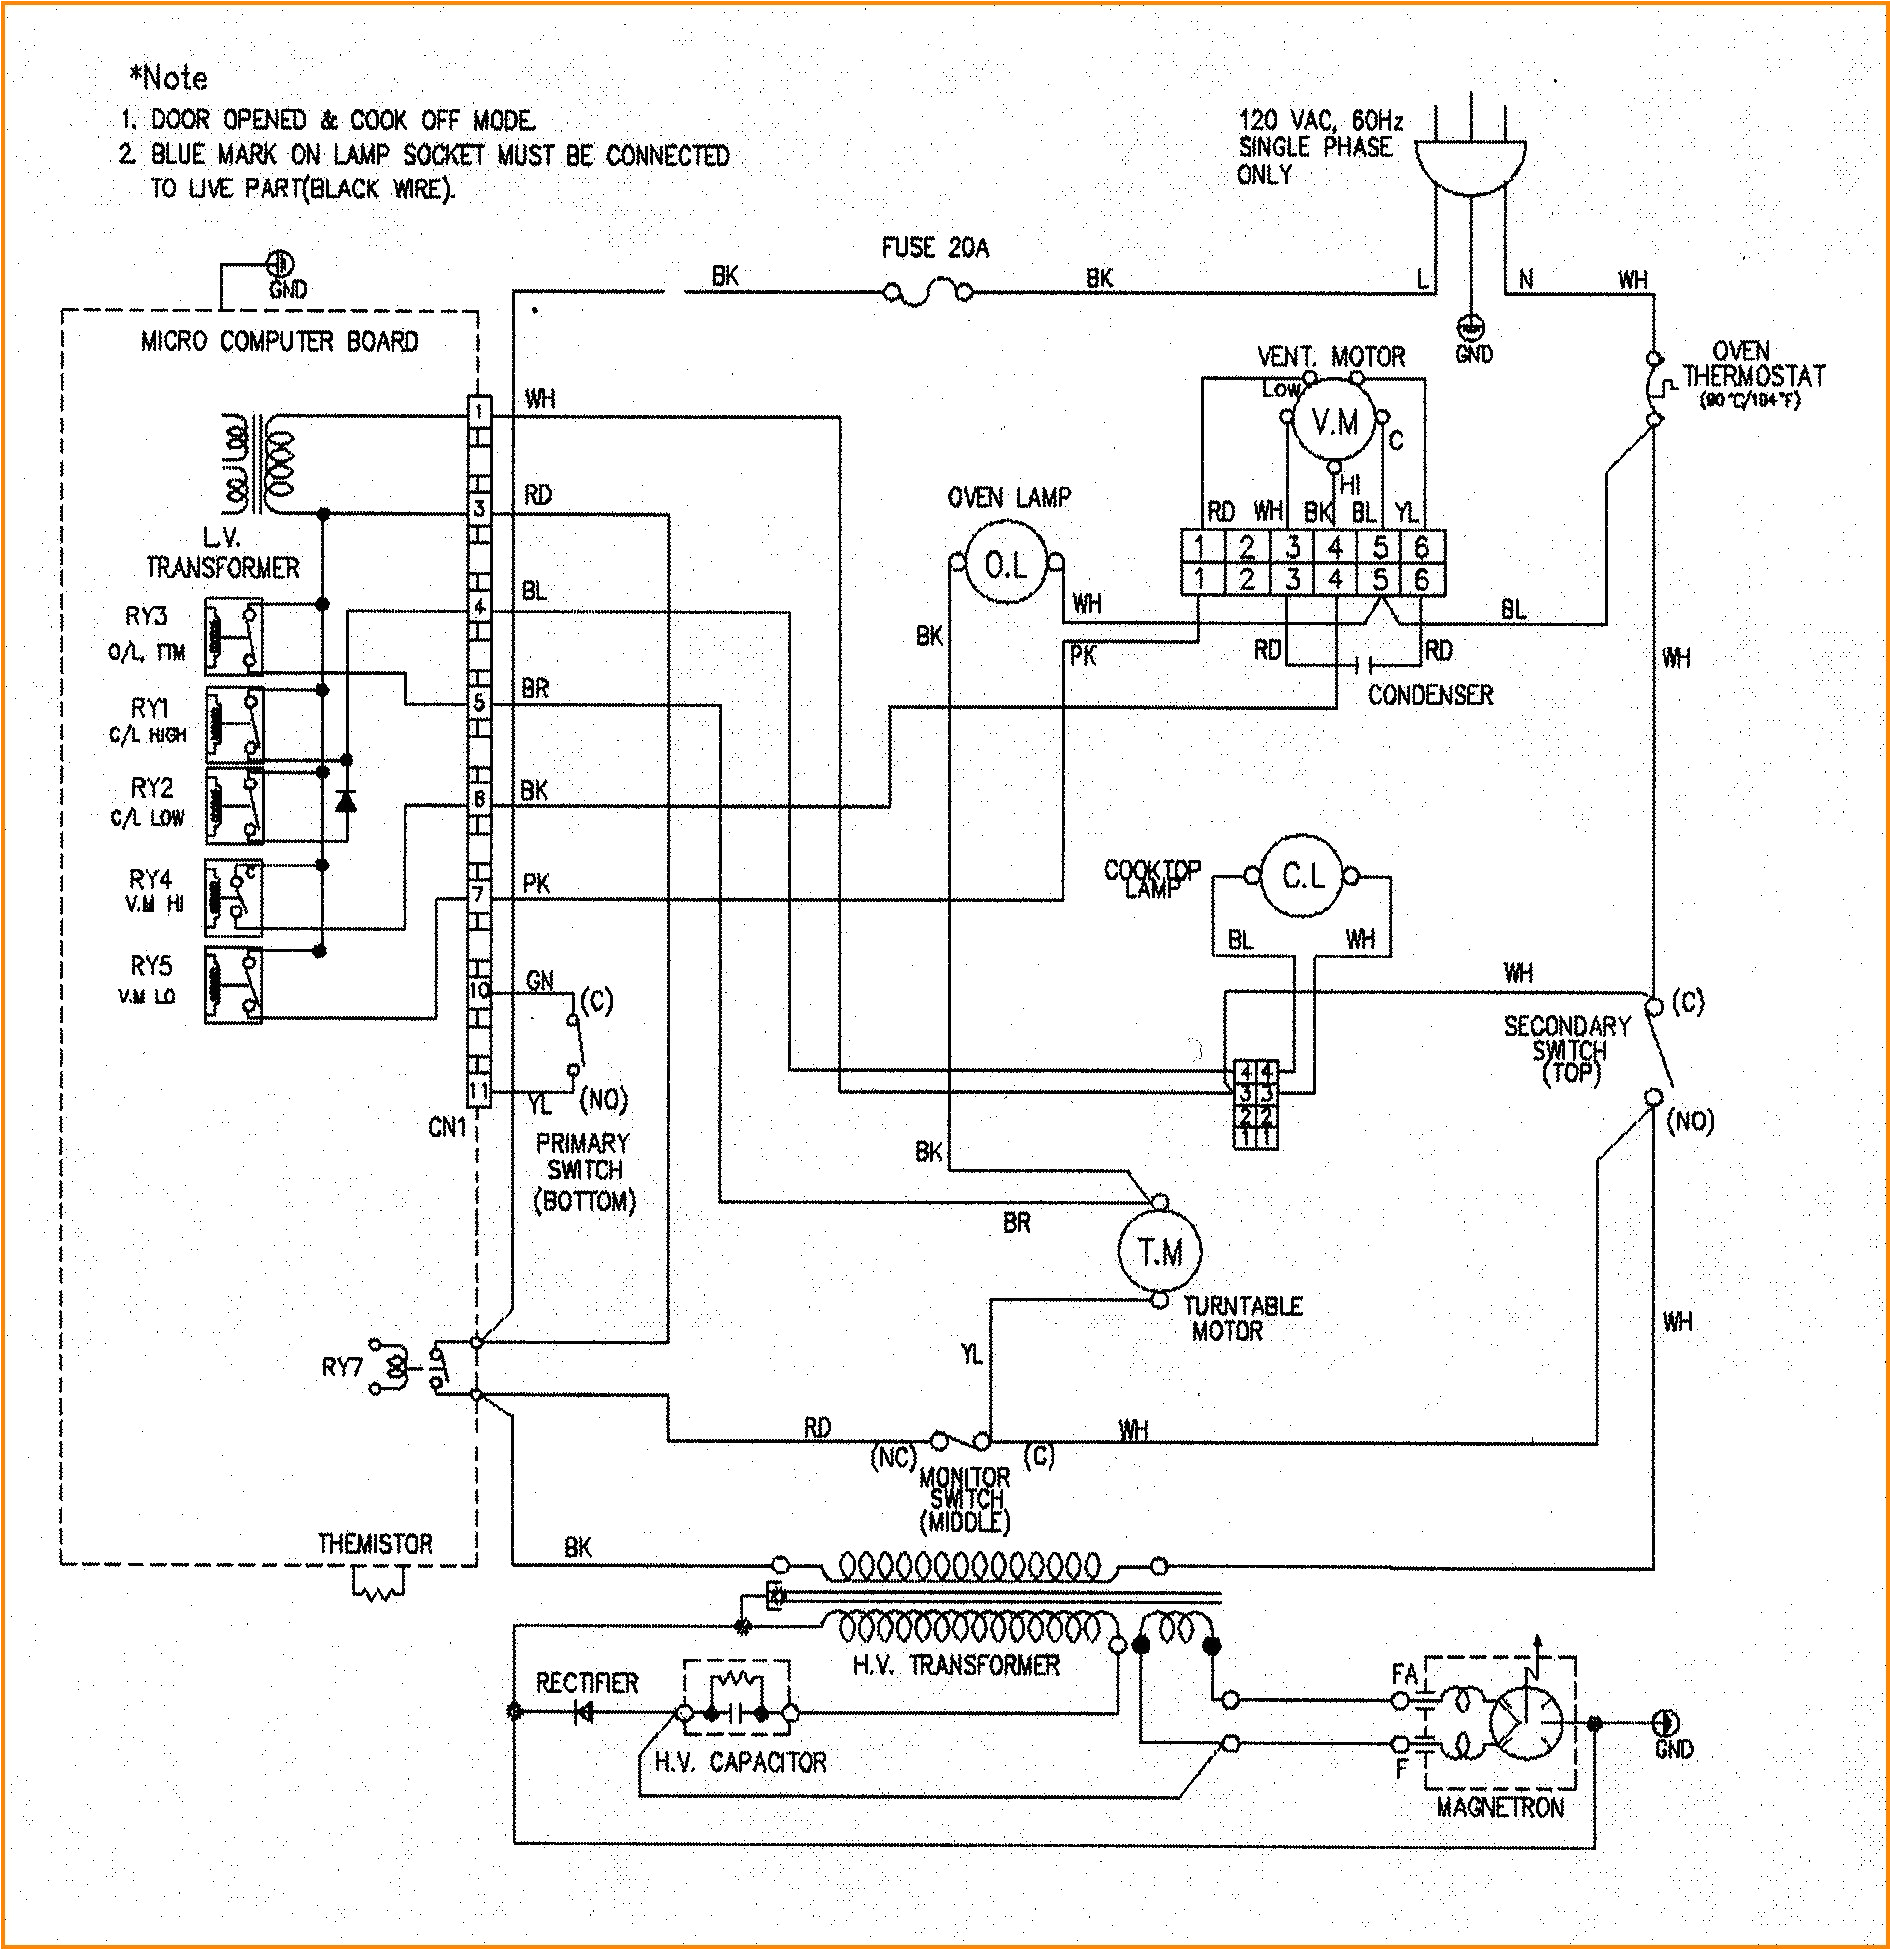 240v stove wiring diagram free download schematic wiring diagram 240v stove wiring diagram free download schematic